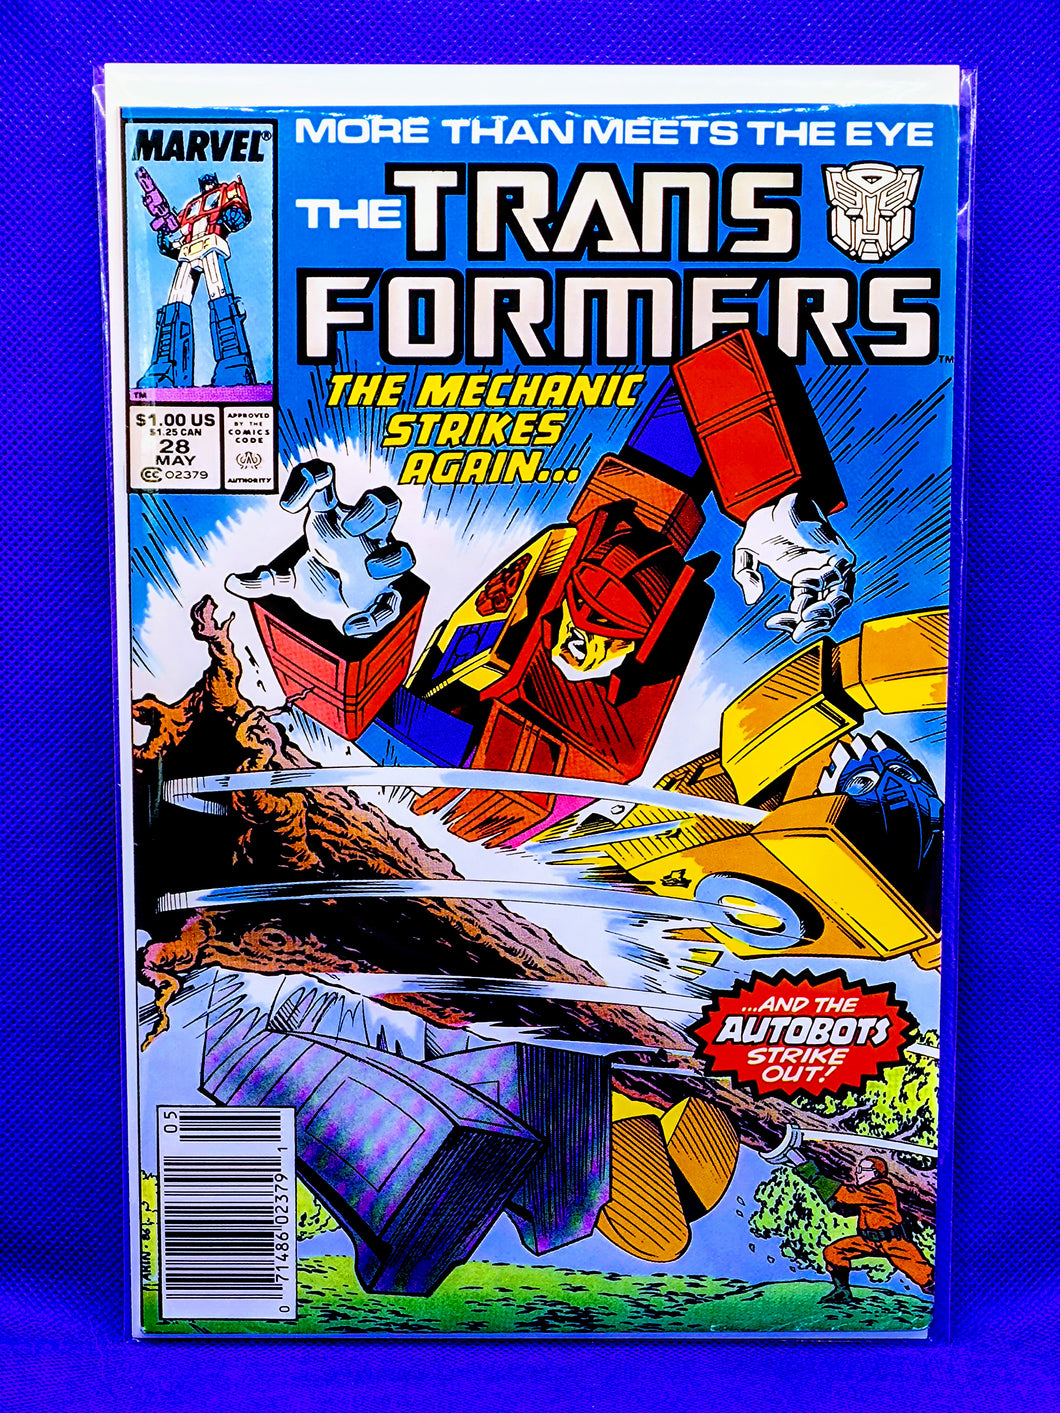 Transformers #28 Newsstand Variant